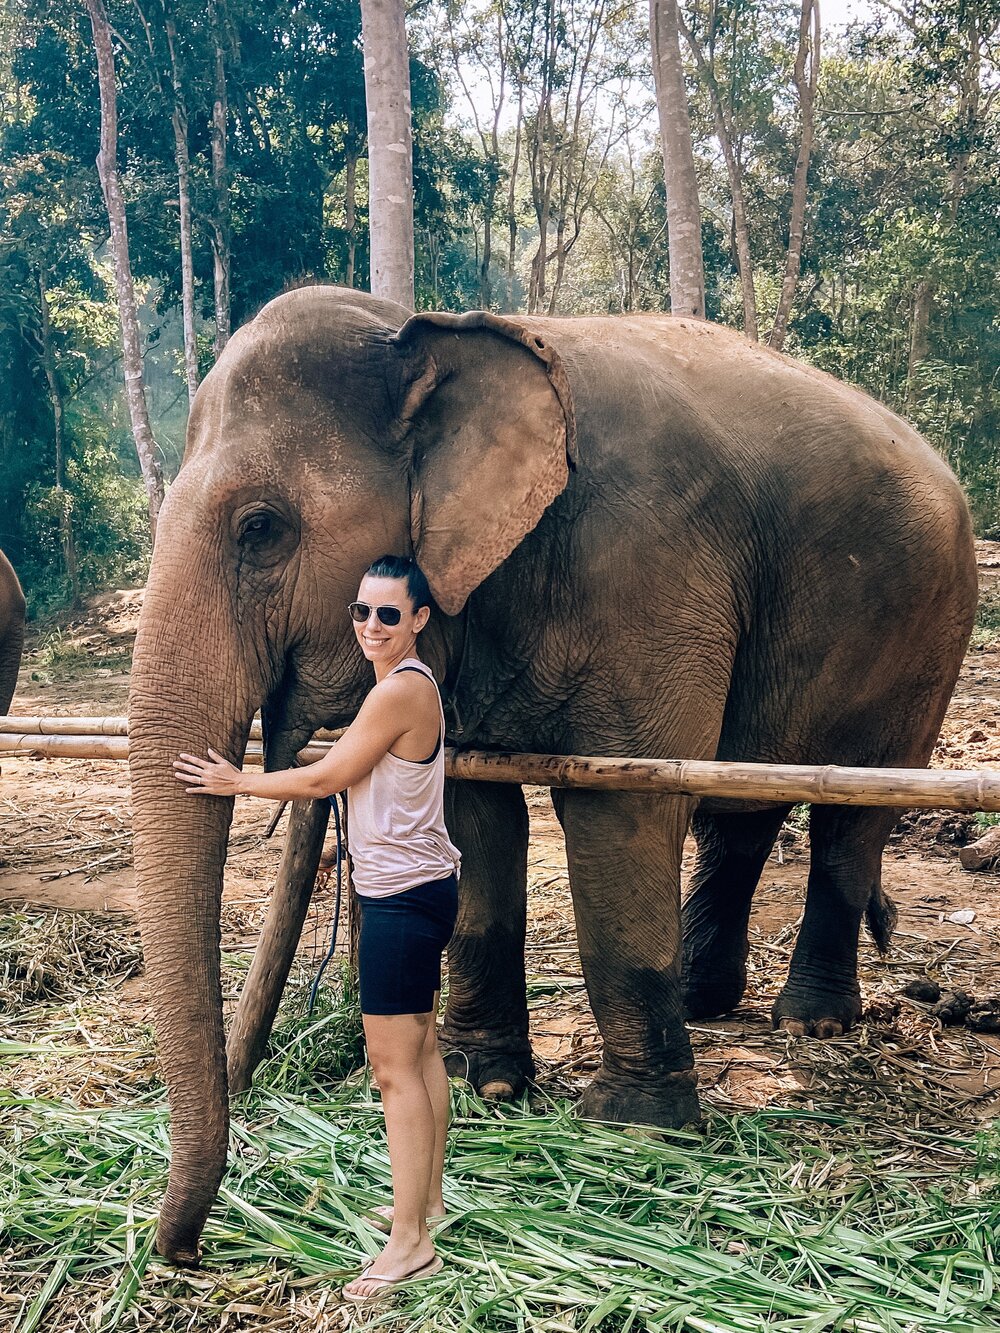 Feeding elephants at Chai Lai resort in Chiang Mai Thailand